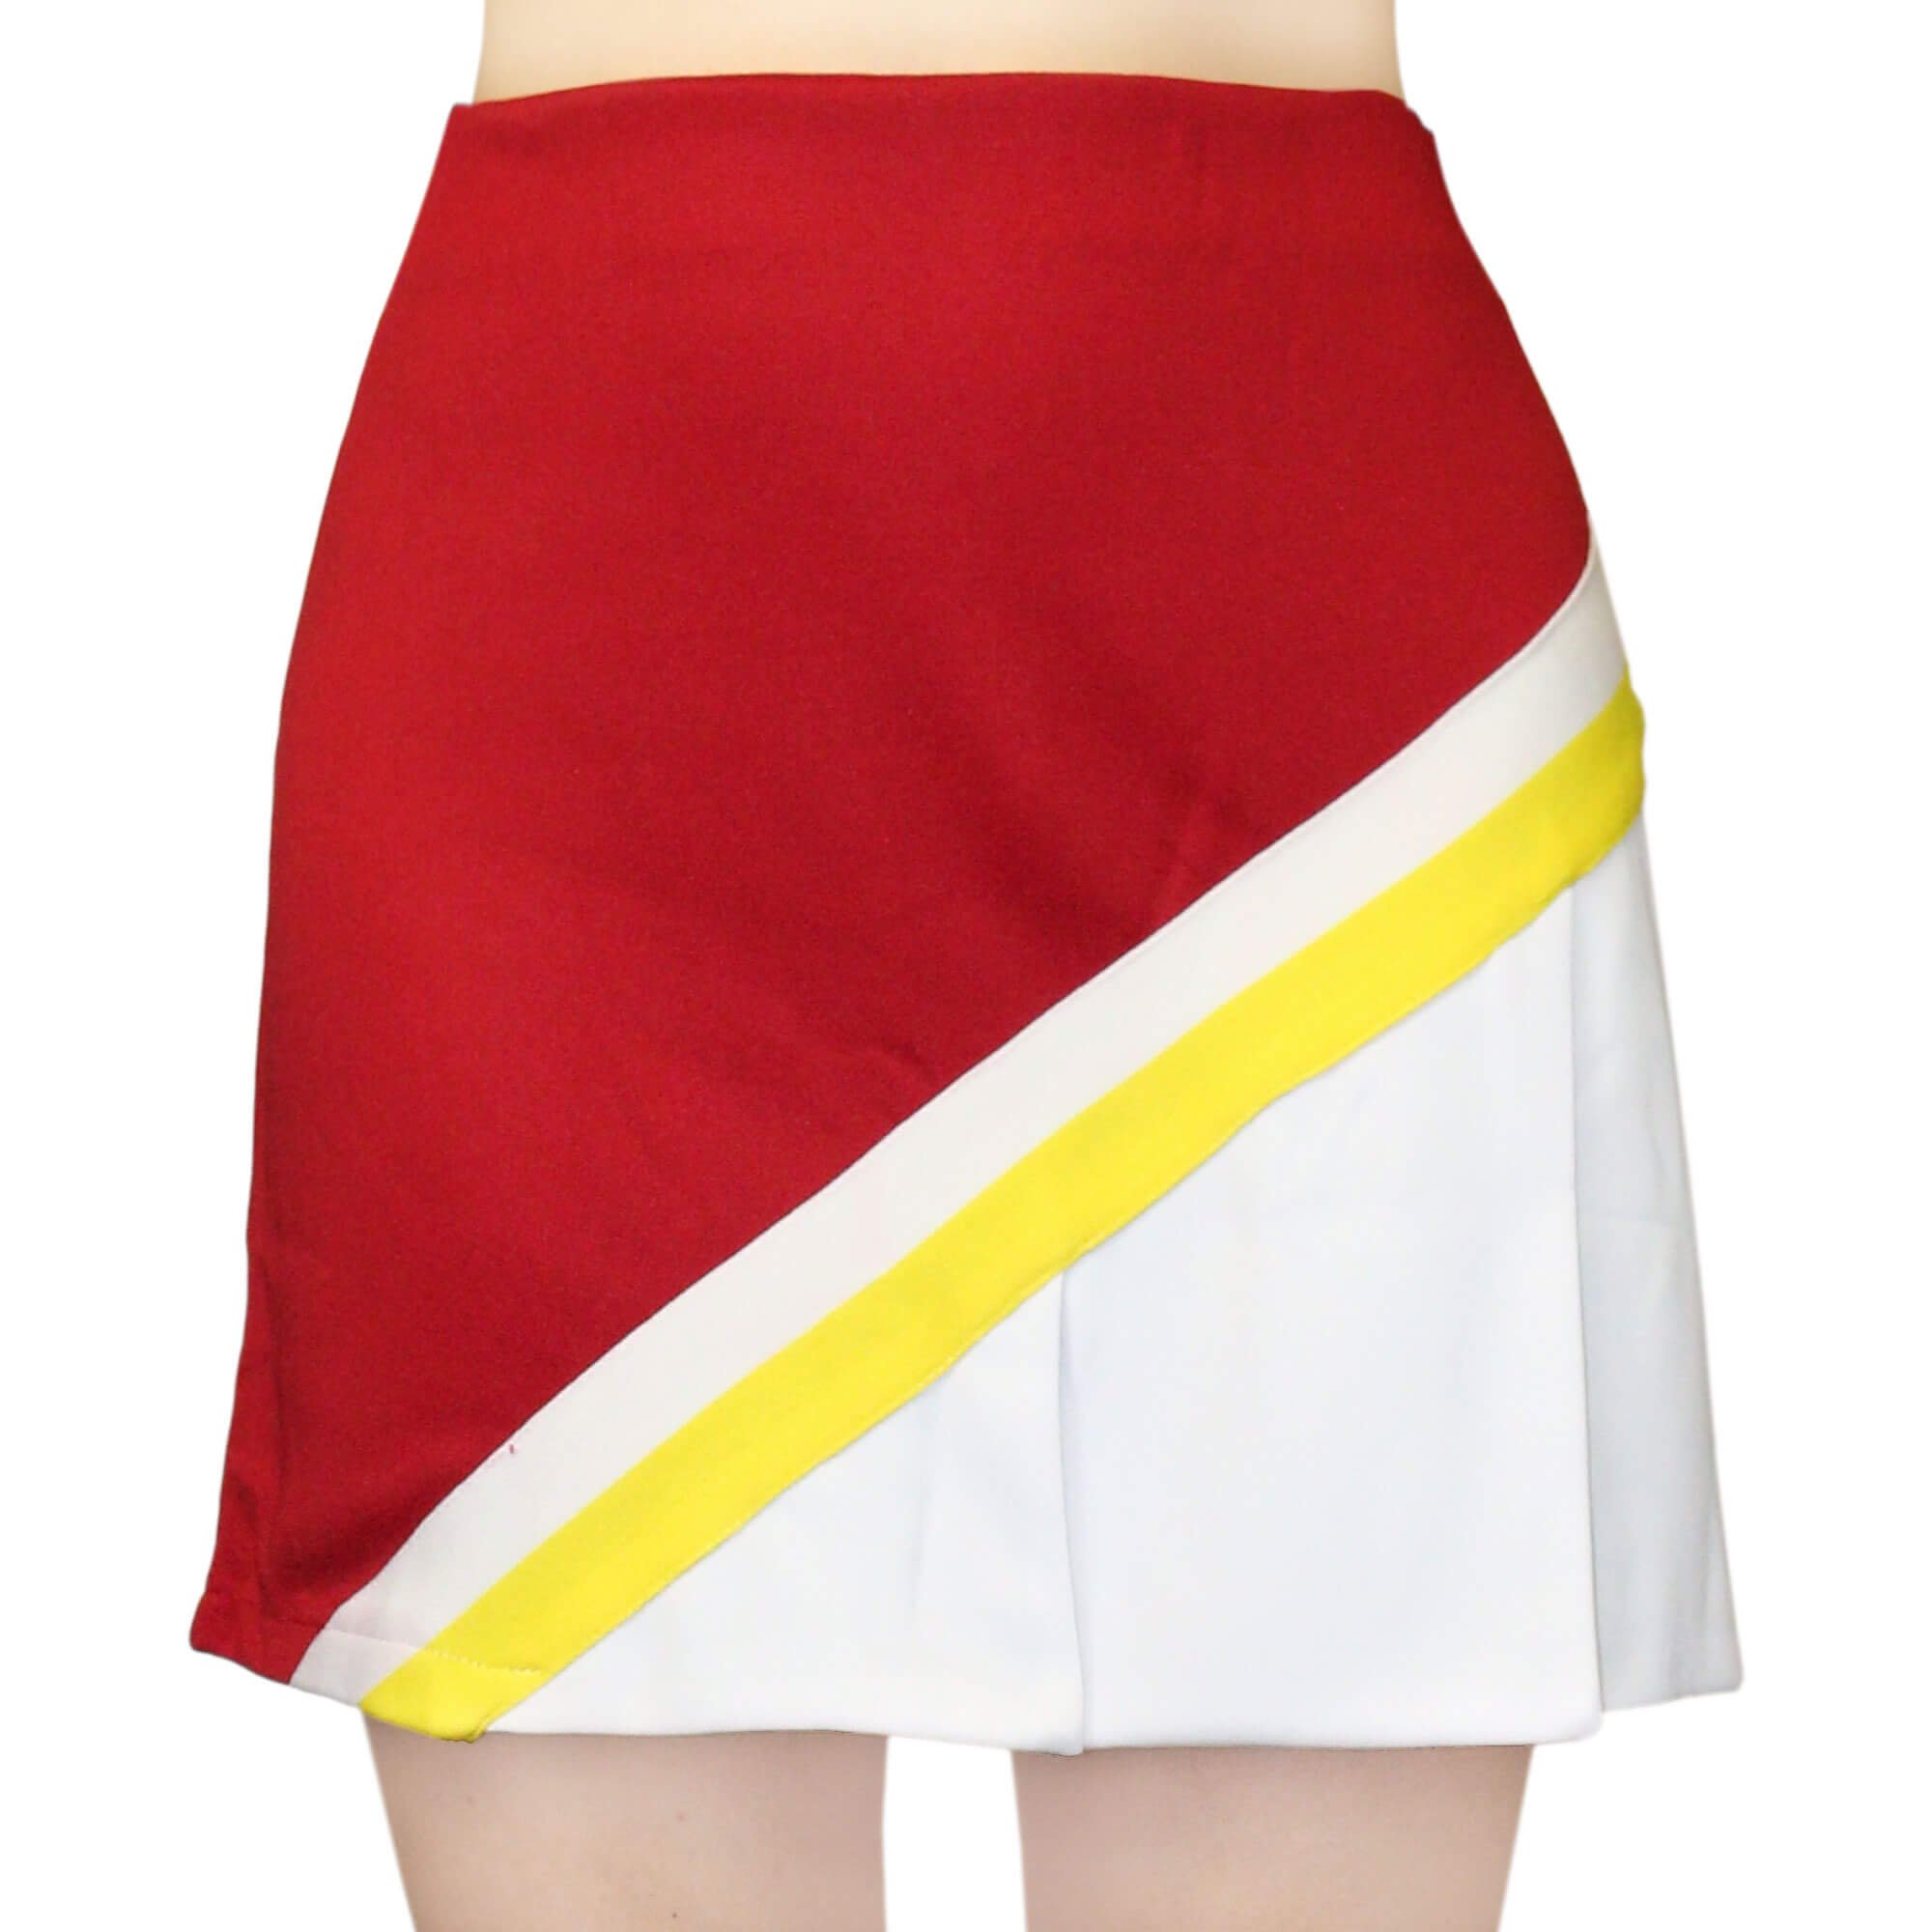 Danzcue Adult A-Line Cheerleading Knit Pleat Skirt